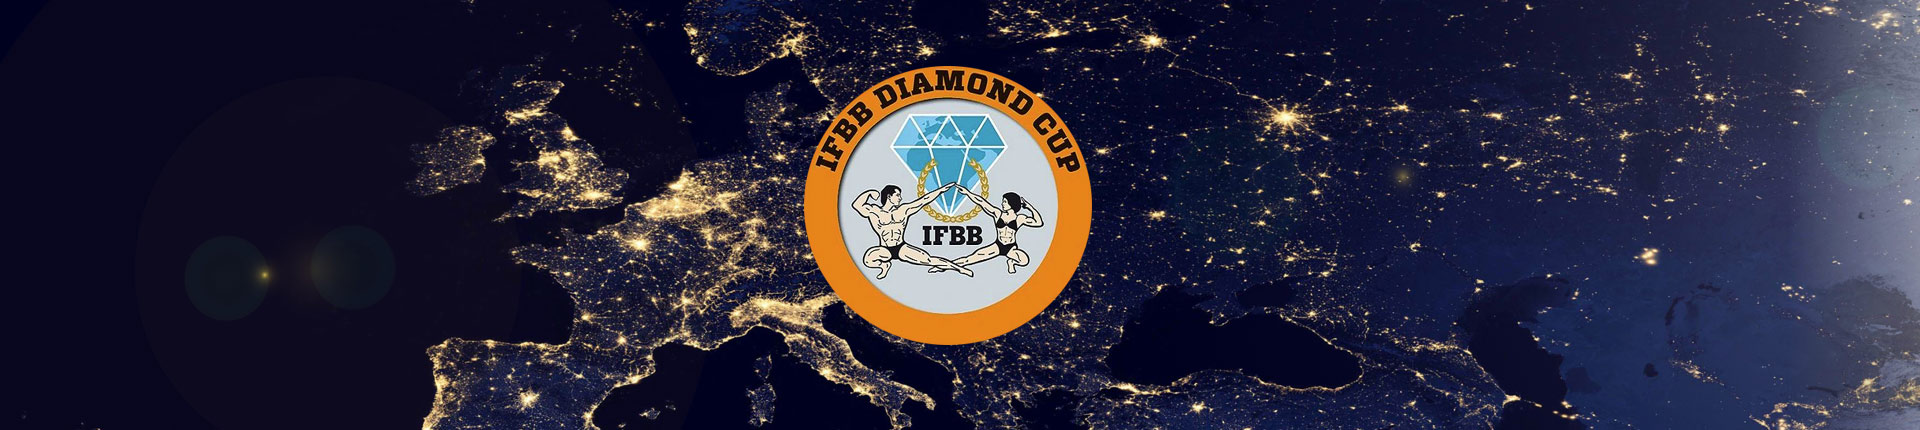 Diamond Cup Warsaw FIWE 2018 - Dzień 2